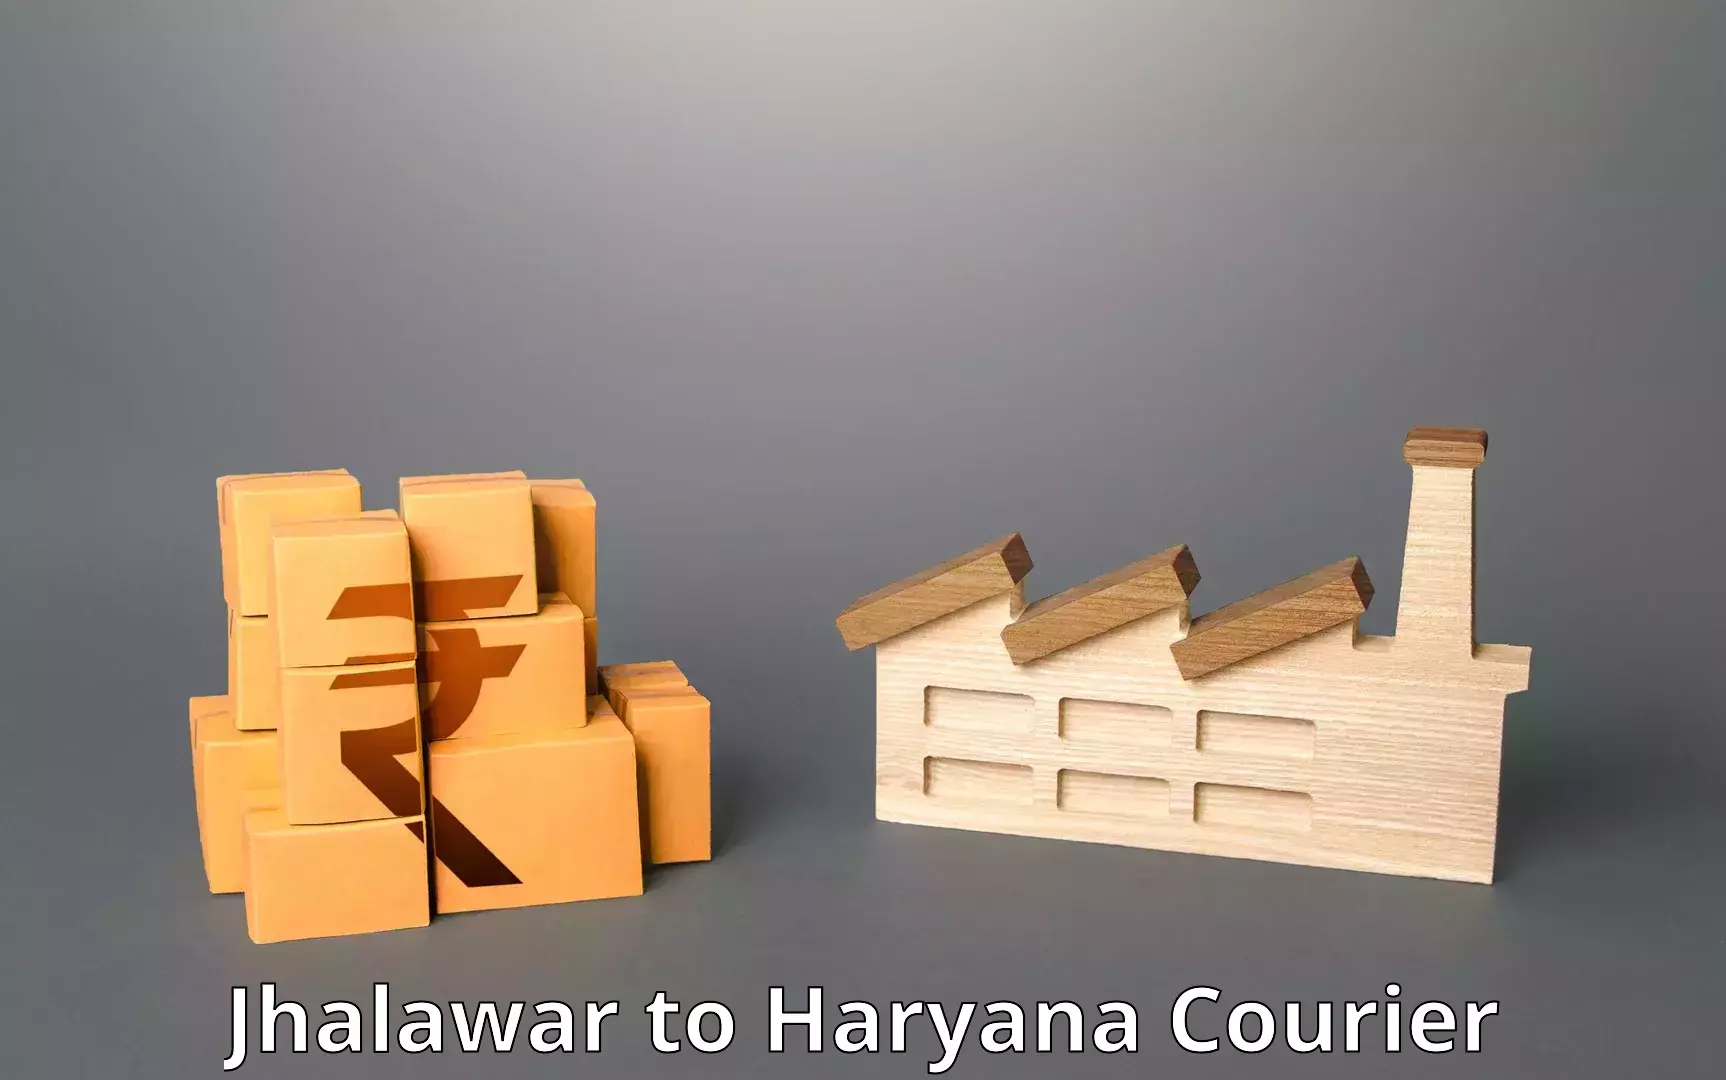 Bulk courier orders Jhalawar to Dharuhera